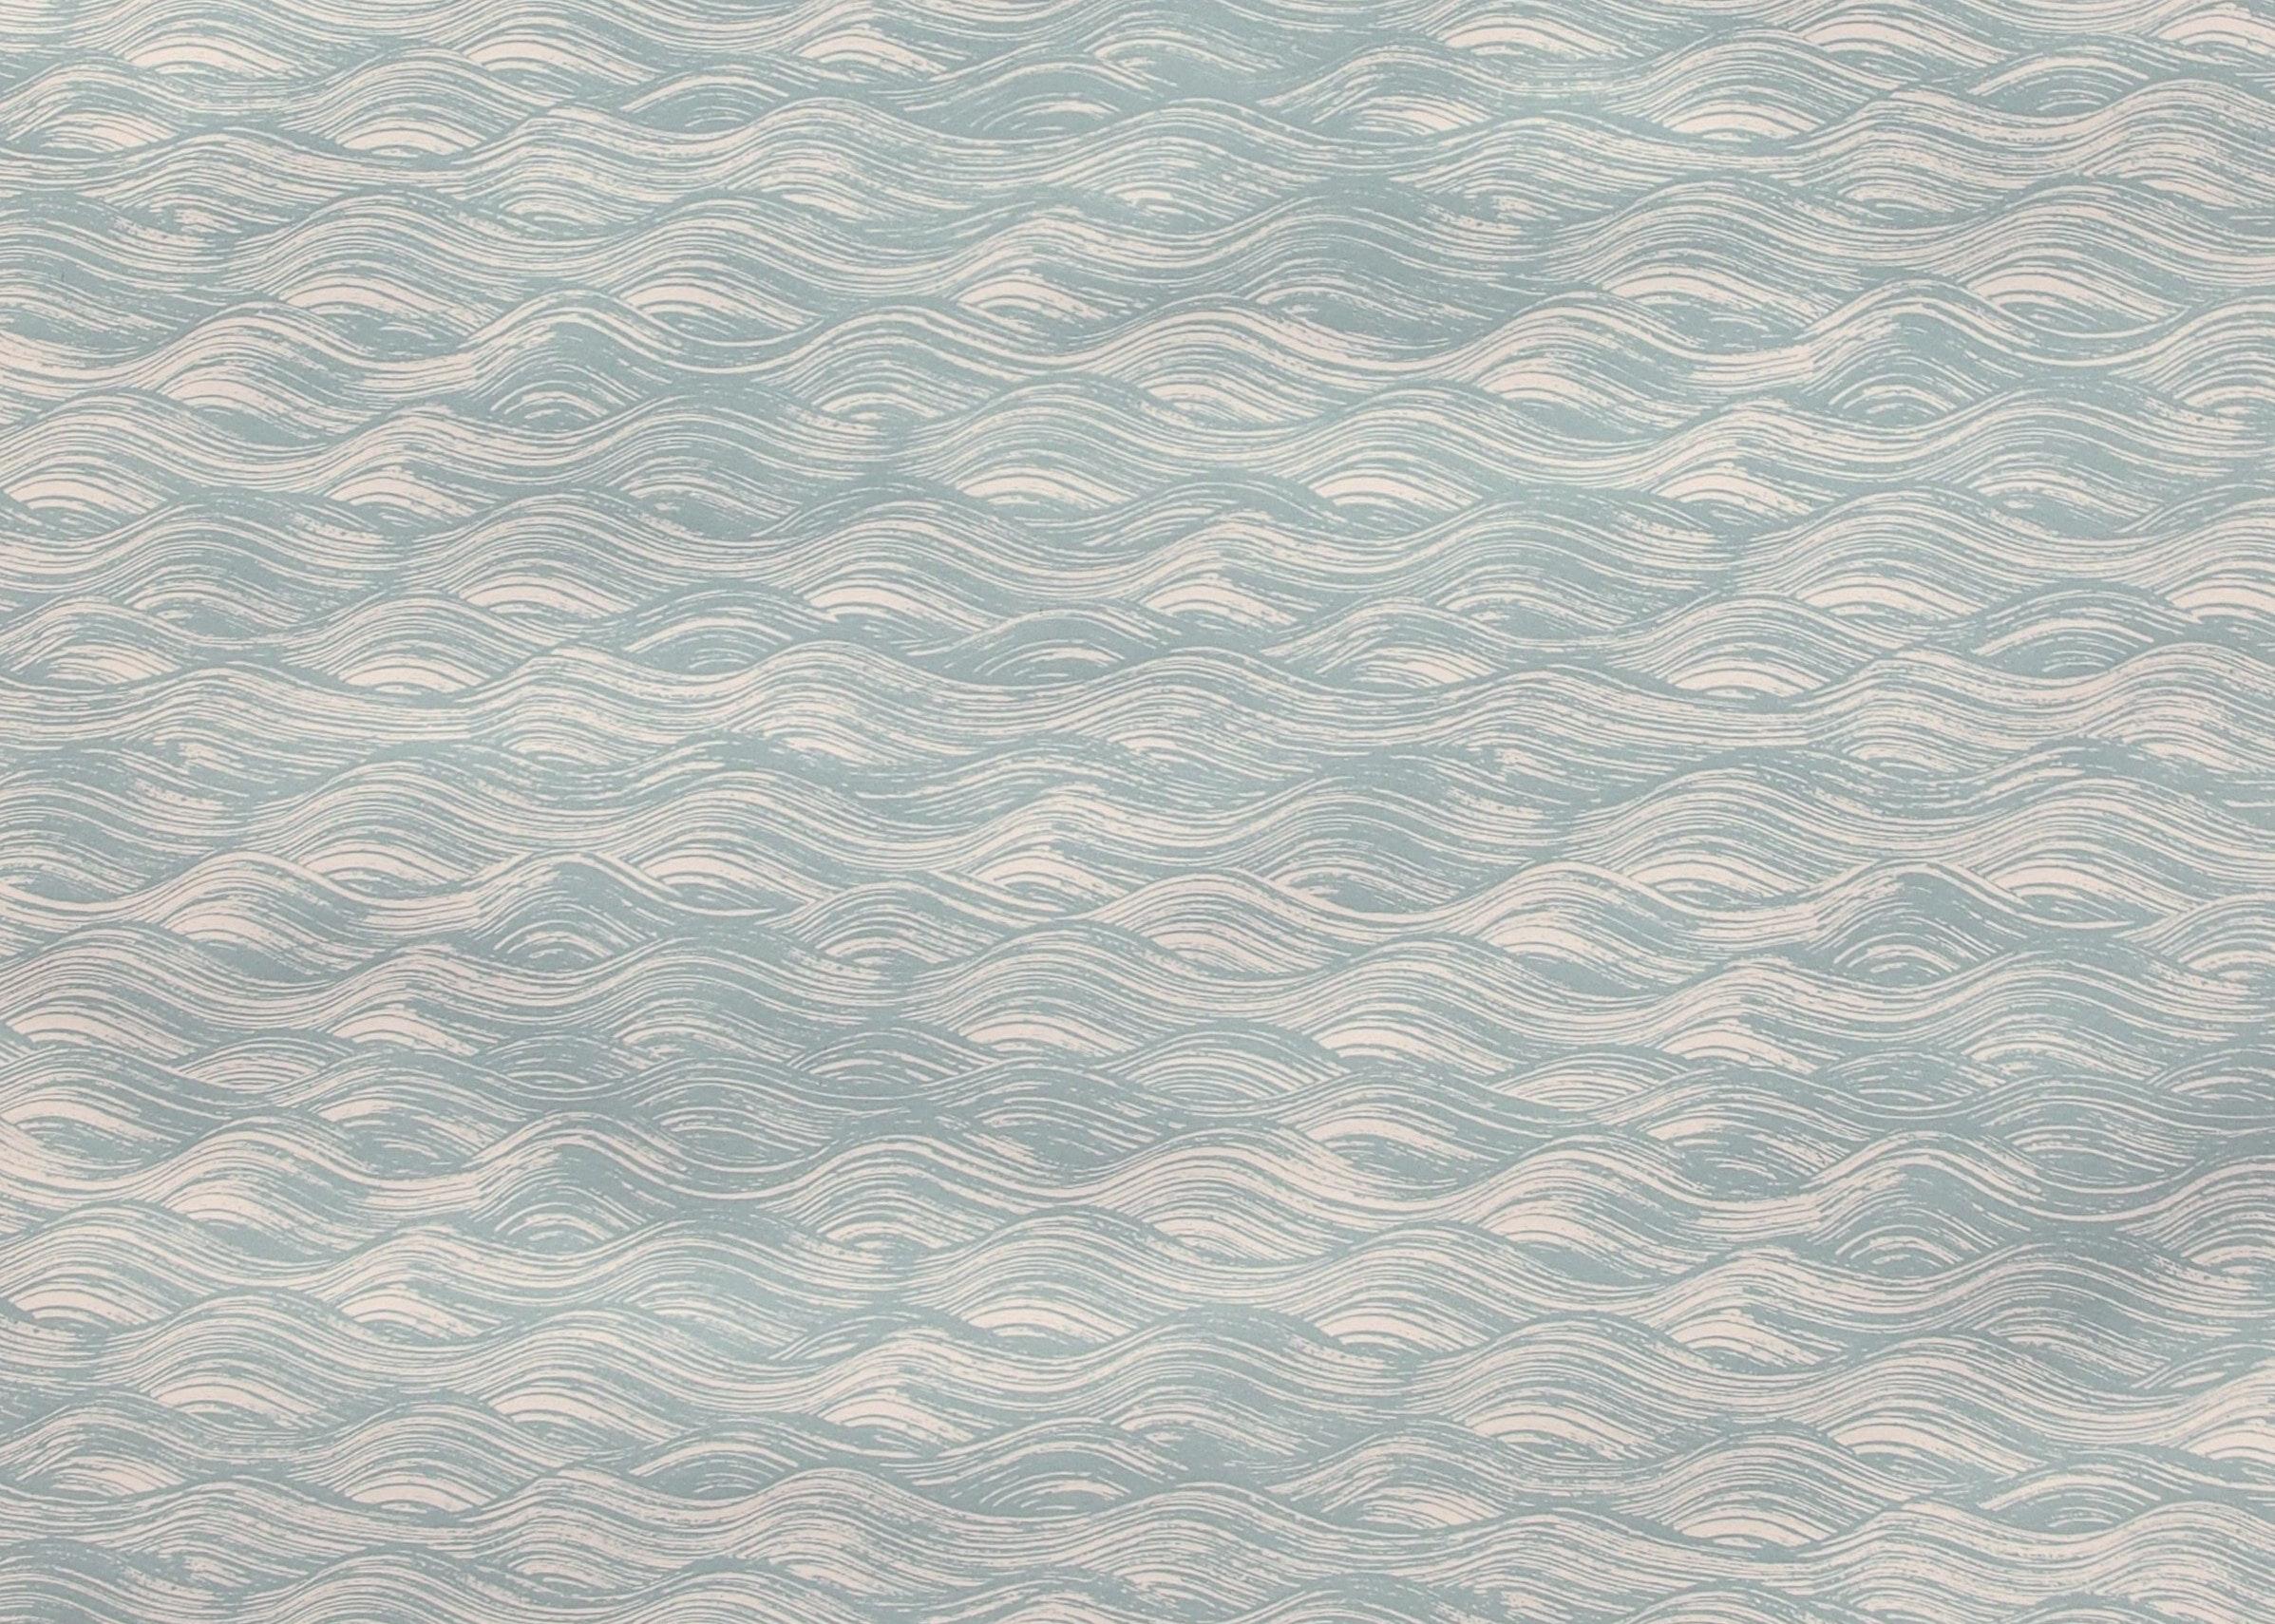 Painted Wave Celadon Wallpaper Prints Solid